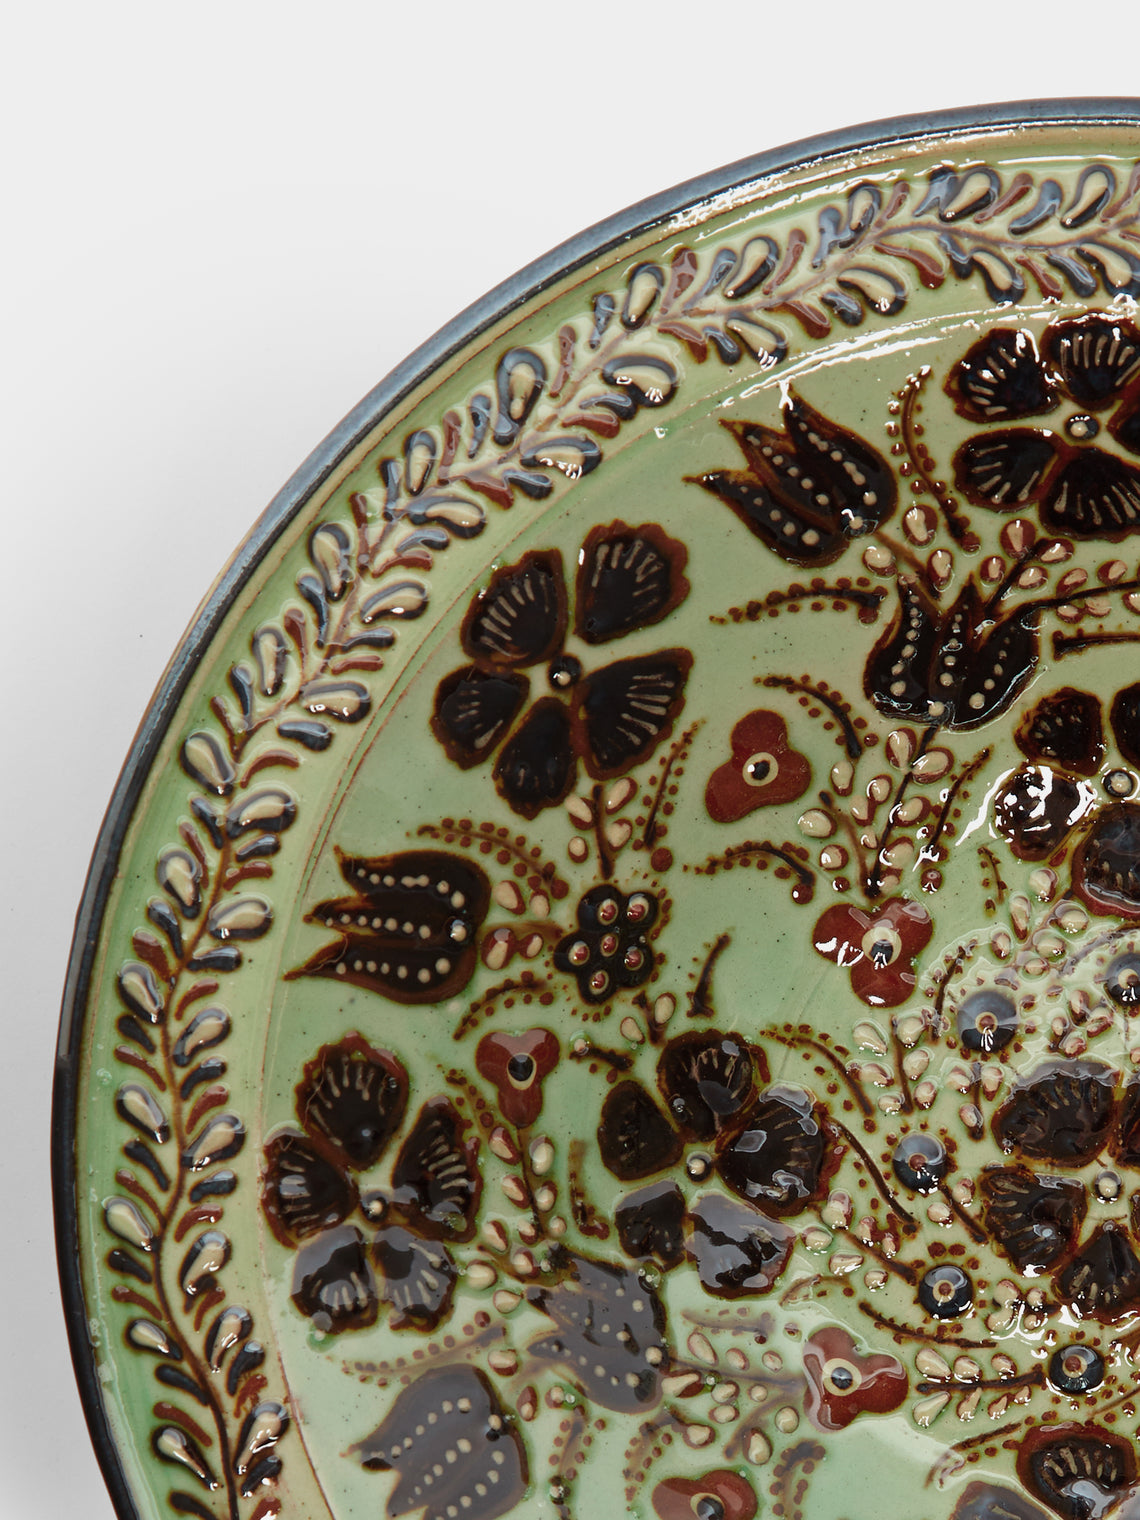 Poterie d’Évires - Flowers Hand-Painted Ceramic Large Serving Bowl -  - ABASK